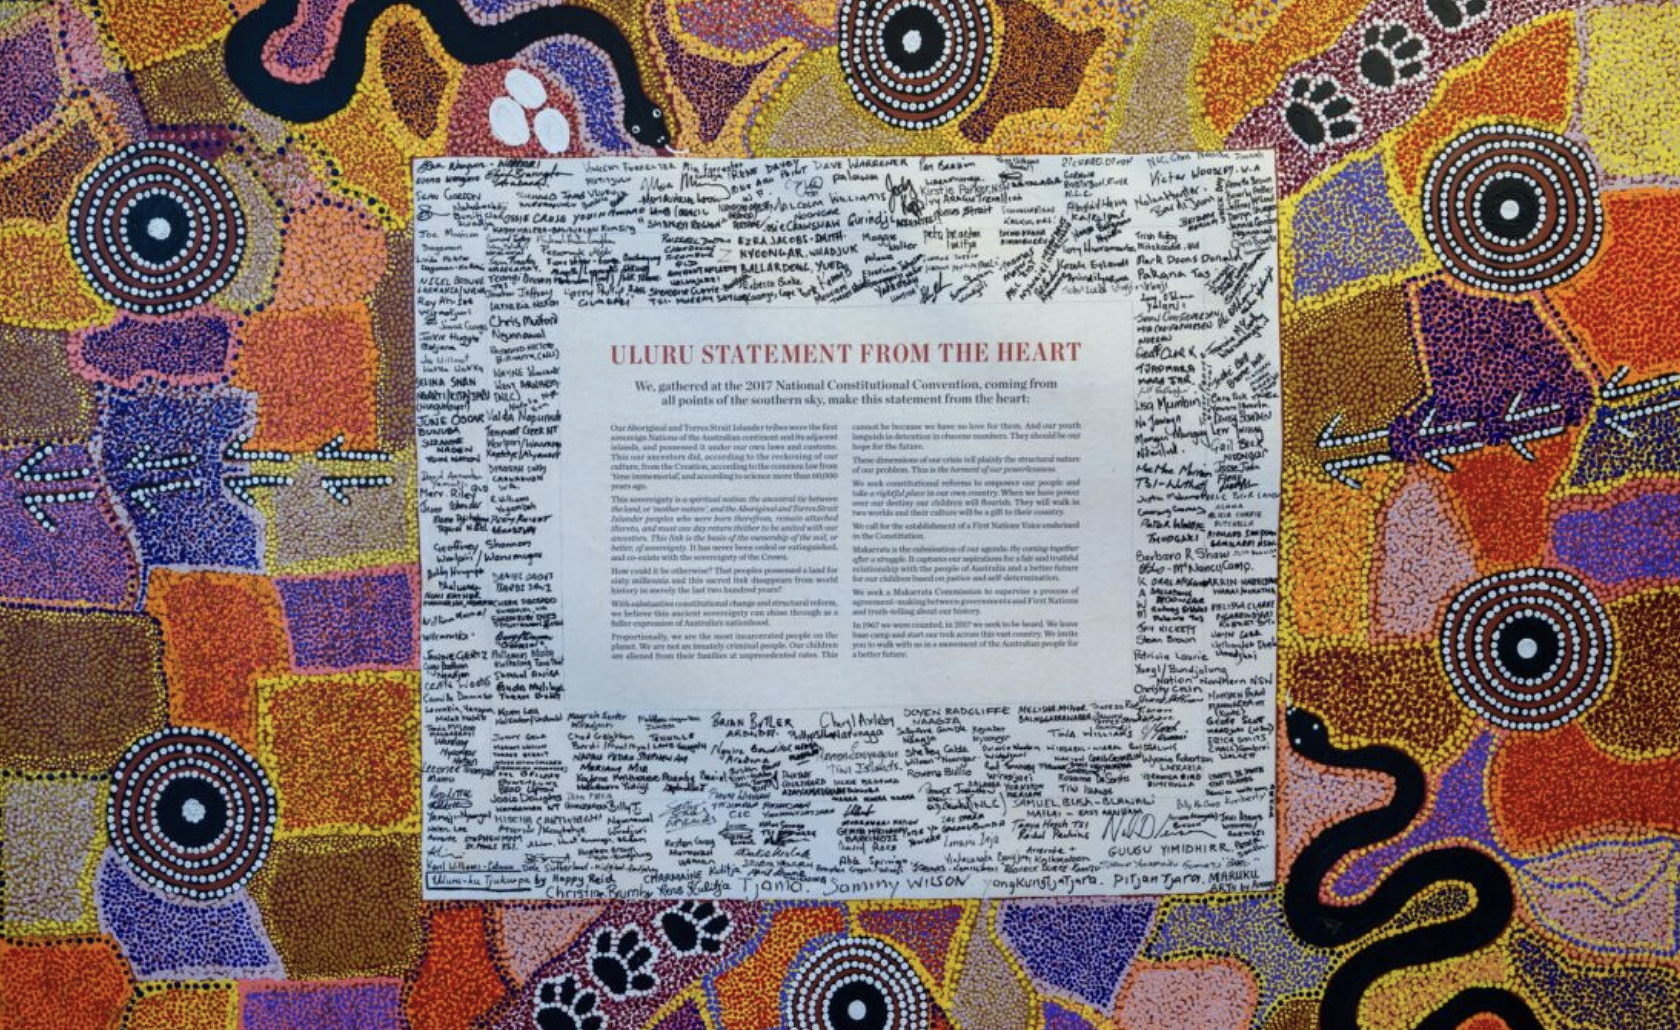 Image: Uluru Statement from the Heart